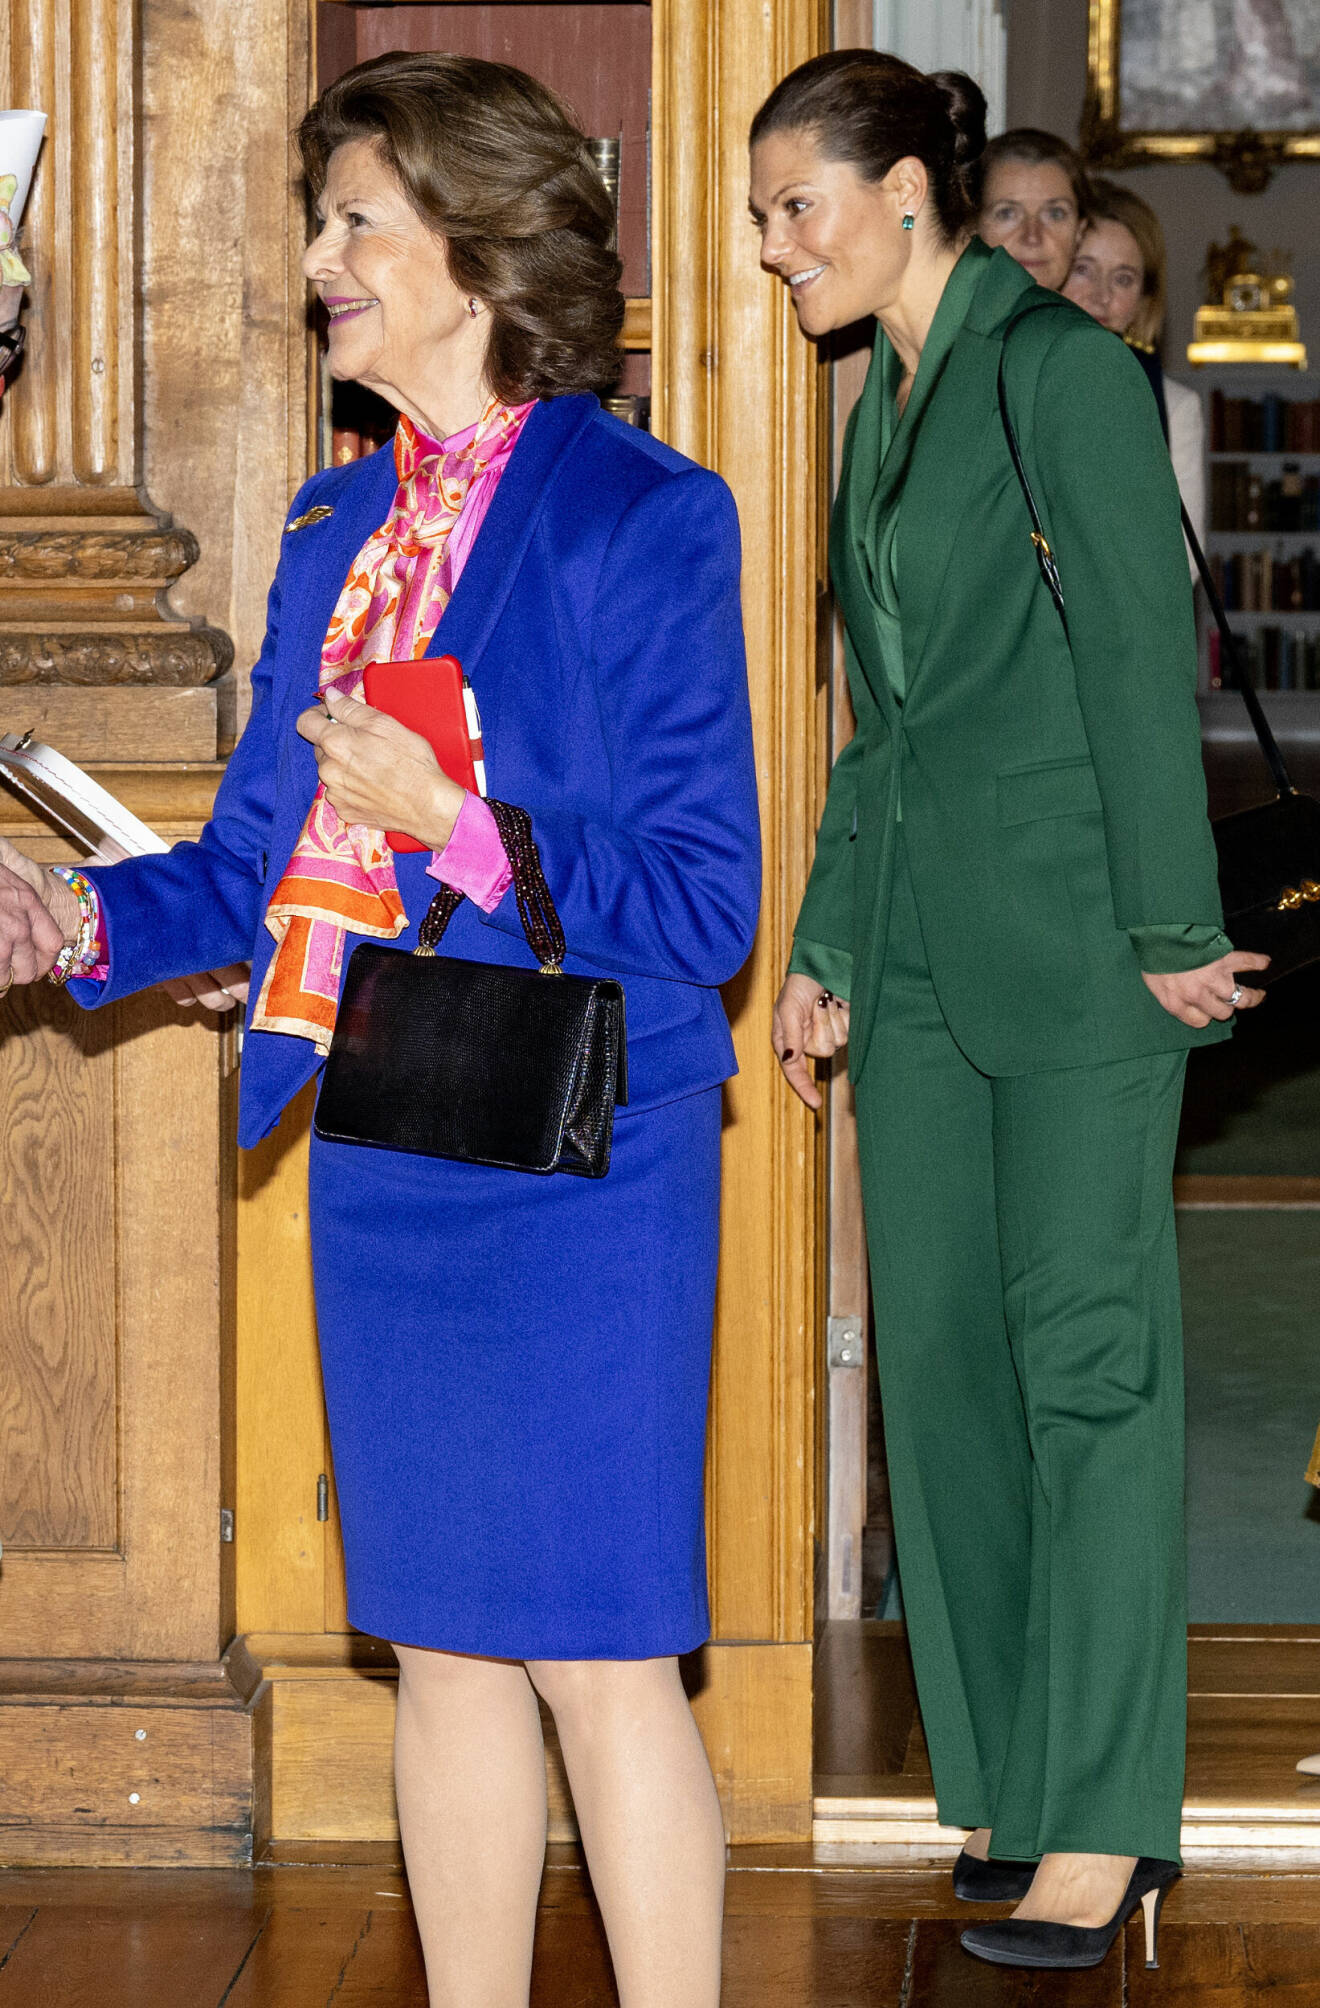 Kronprinsessan Victoria iklädd grön kostym.